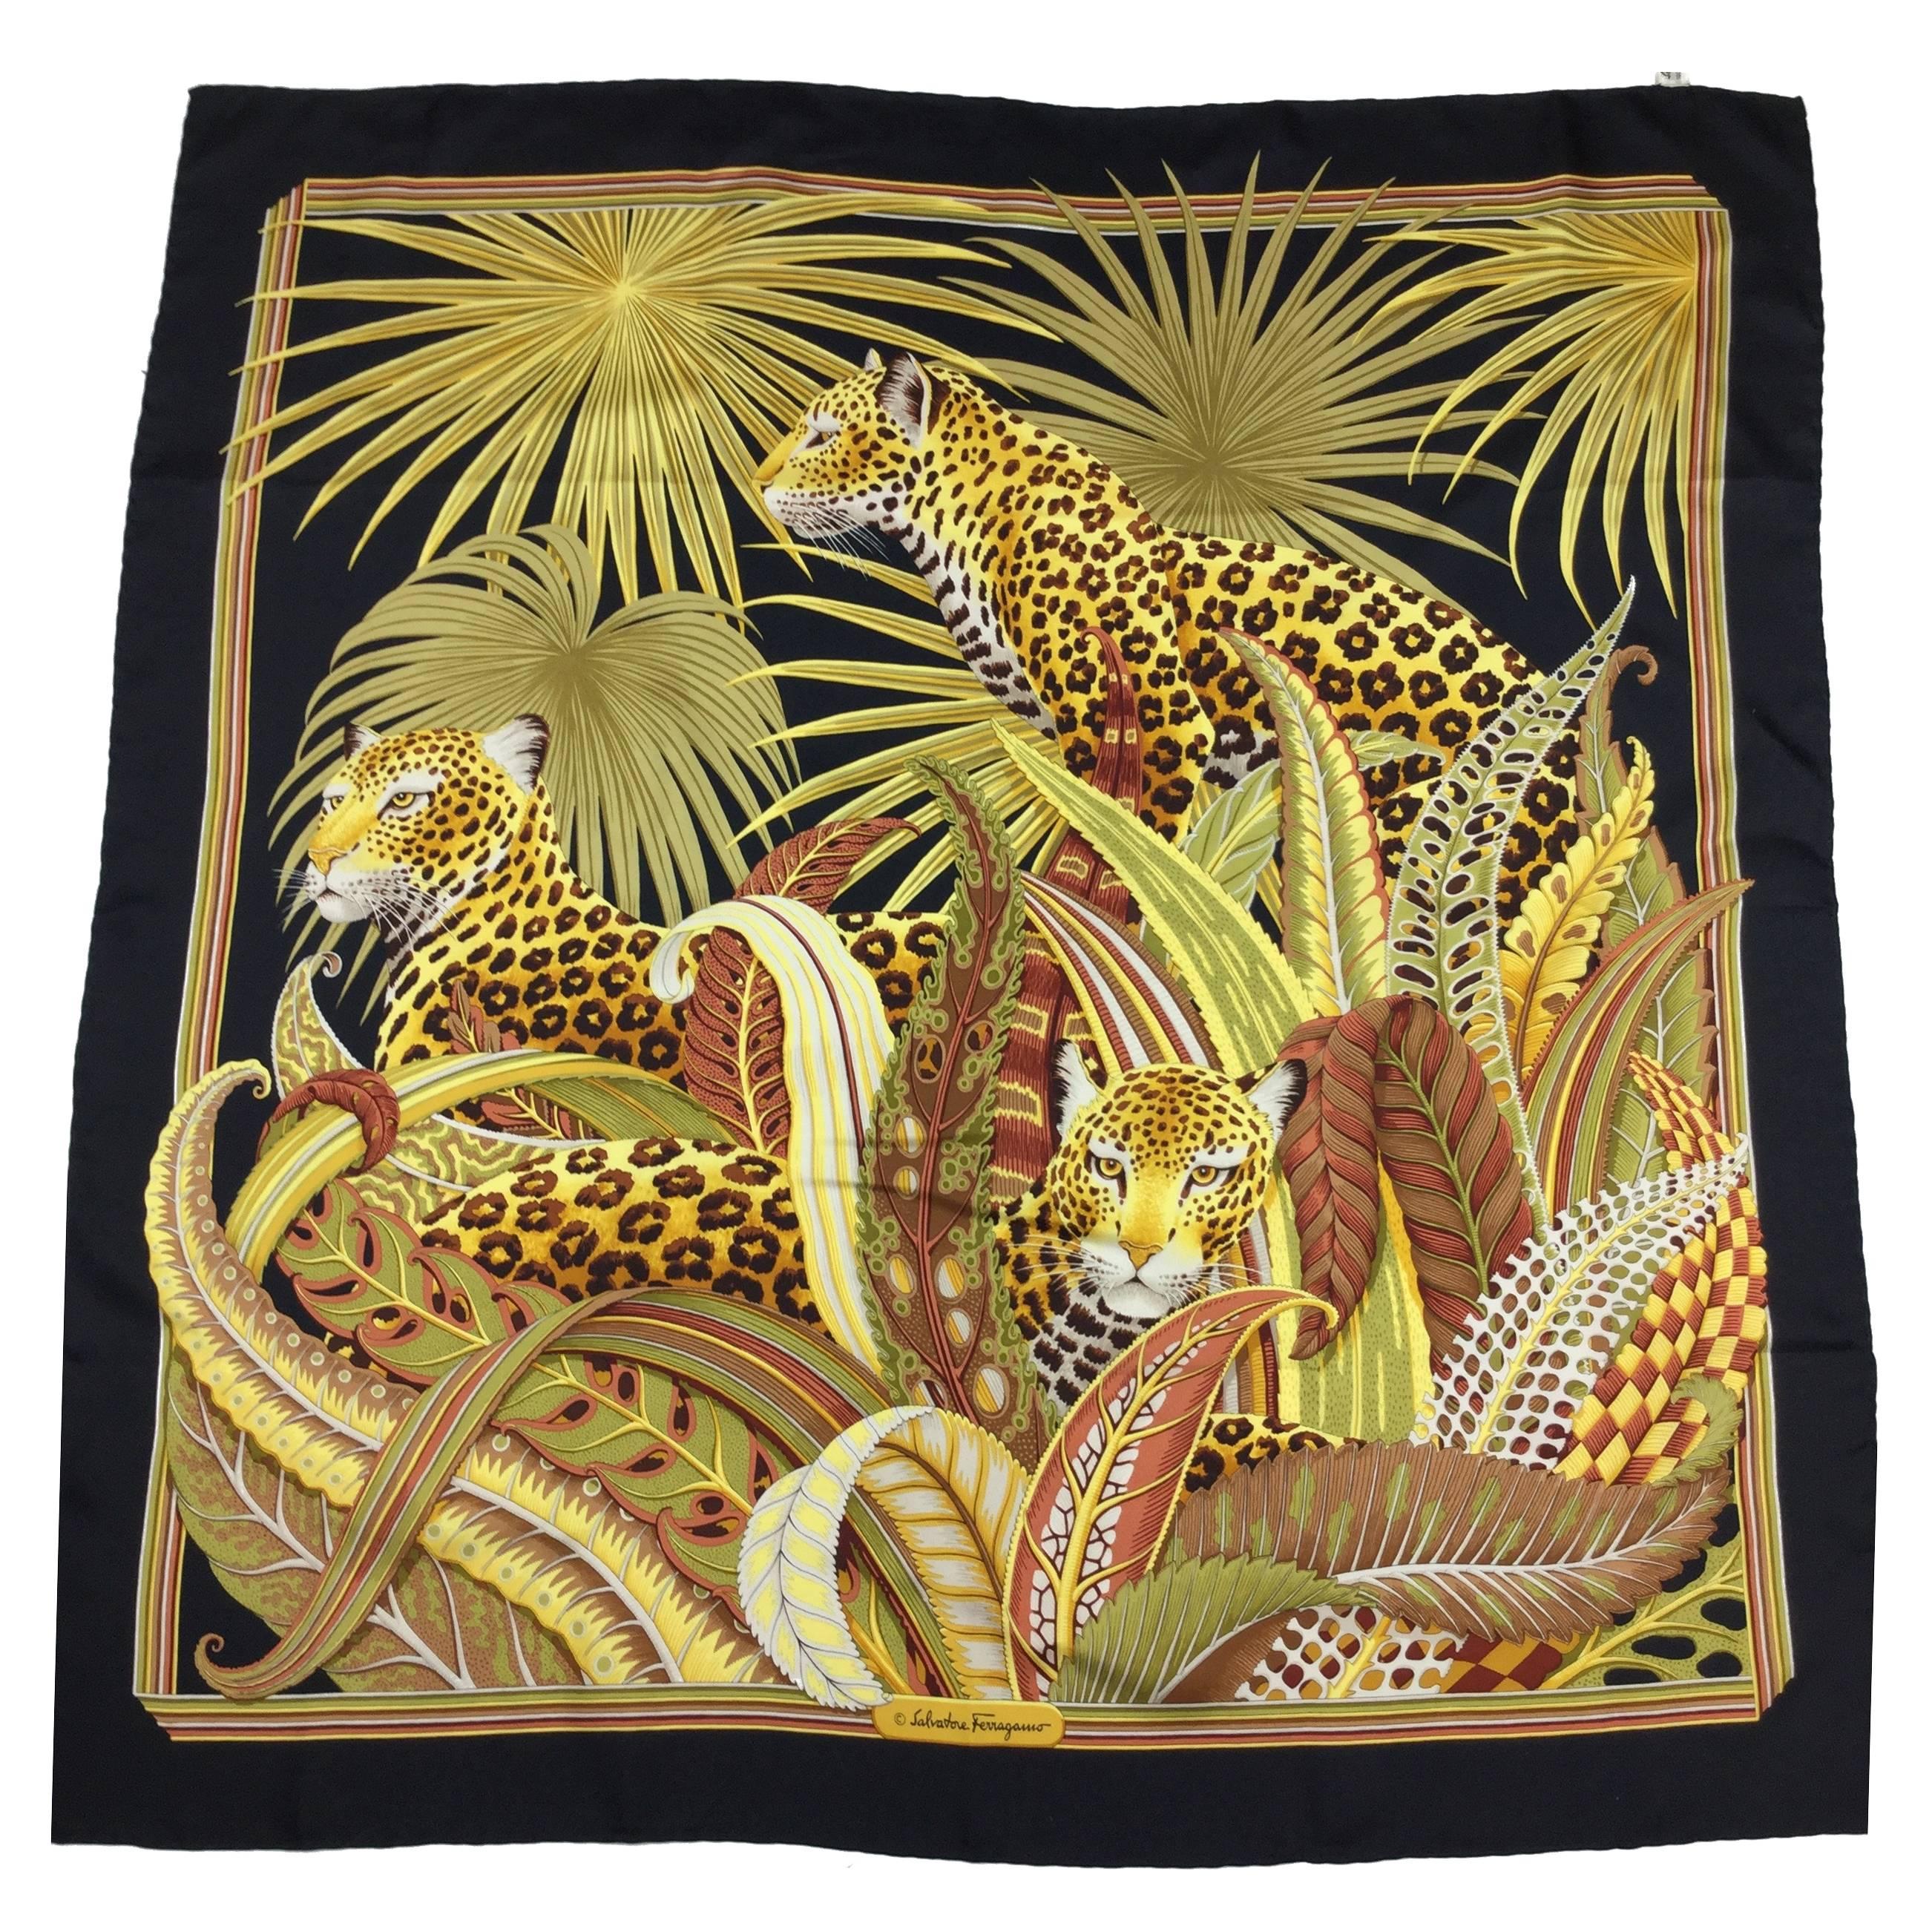 Spectacular Jungle Themed Vintage Silk Scarf By Ferragamo.